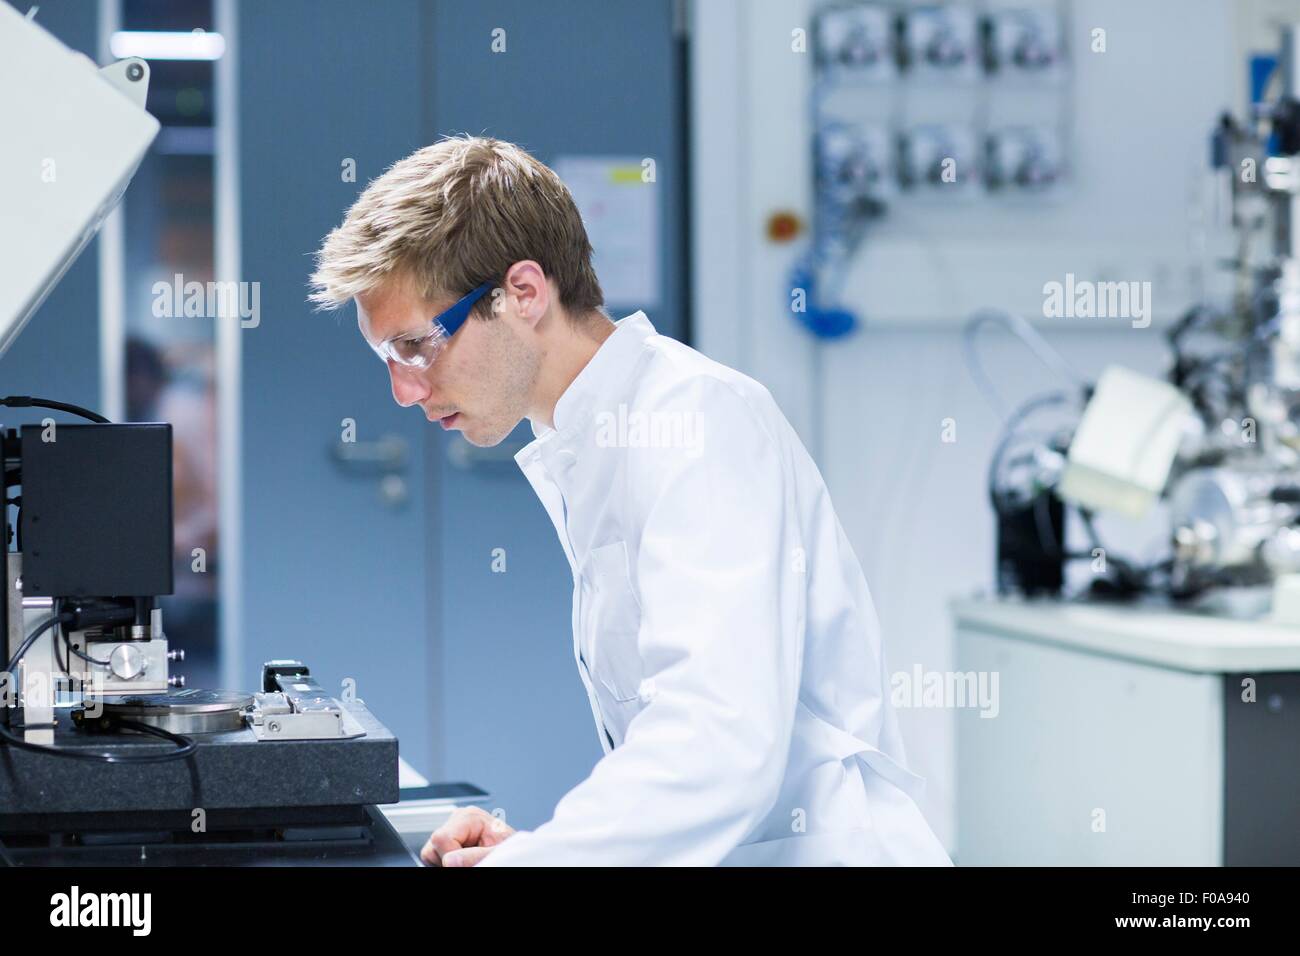 Male scientist monitoring equipment in laboratory Stock Photo